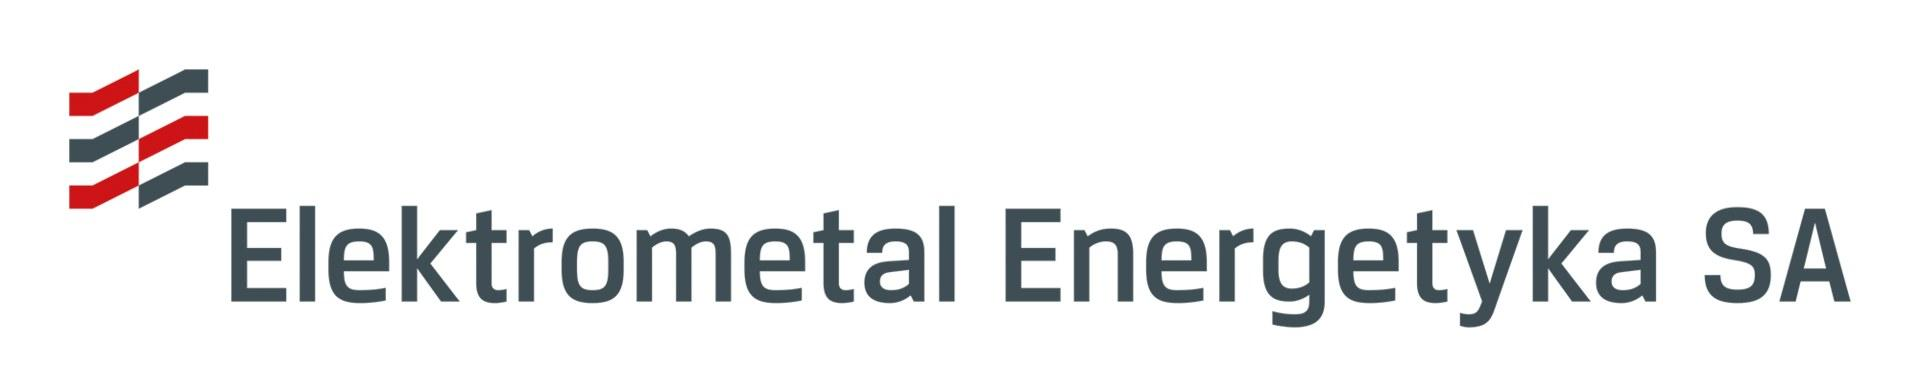 elektrometal energetyka logo